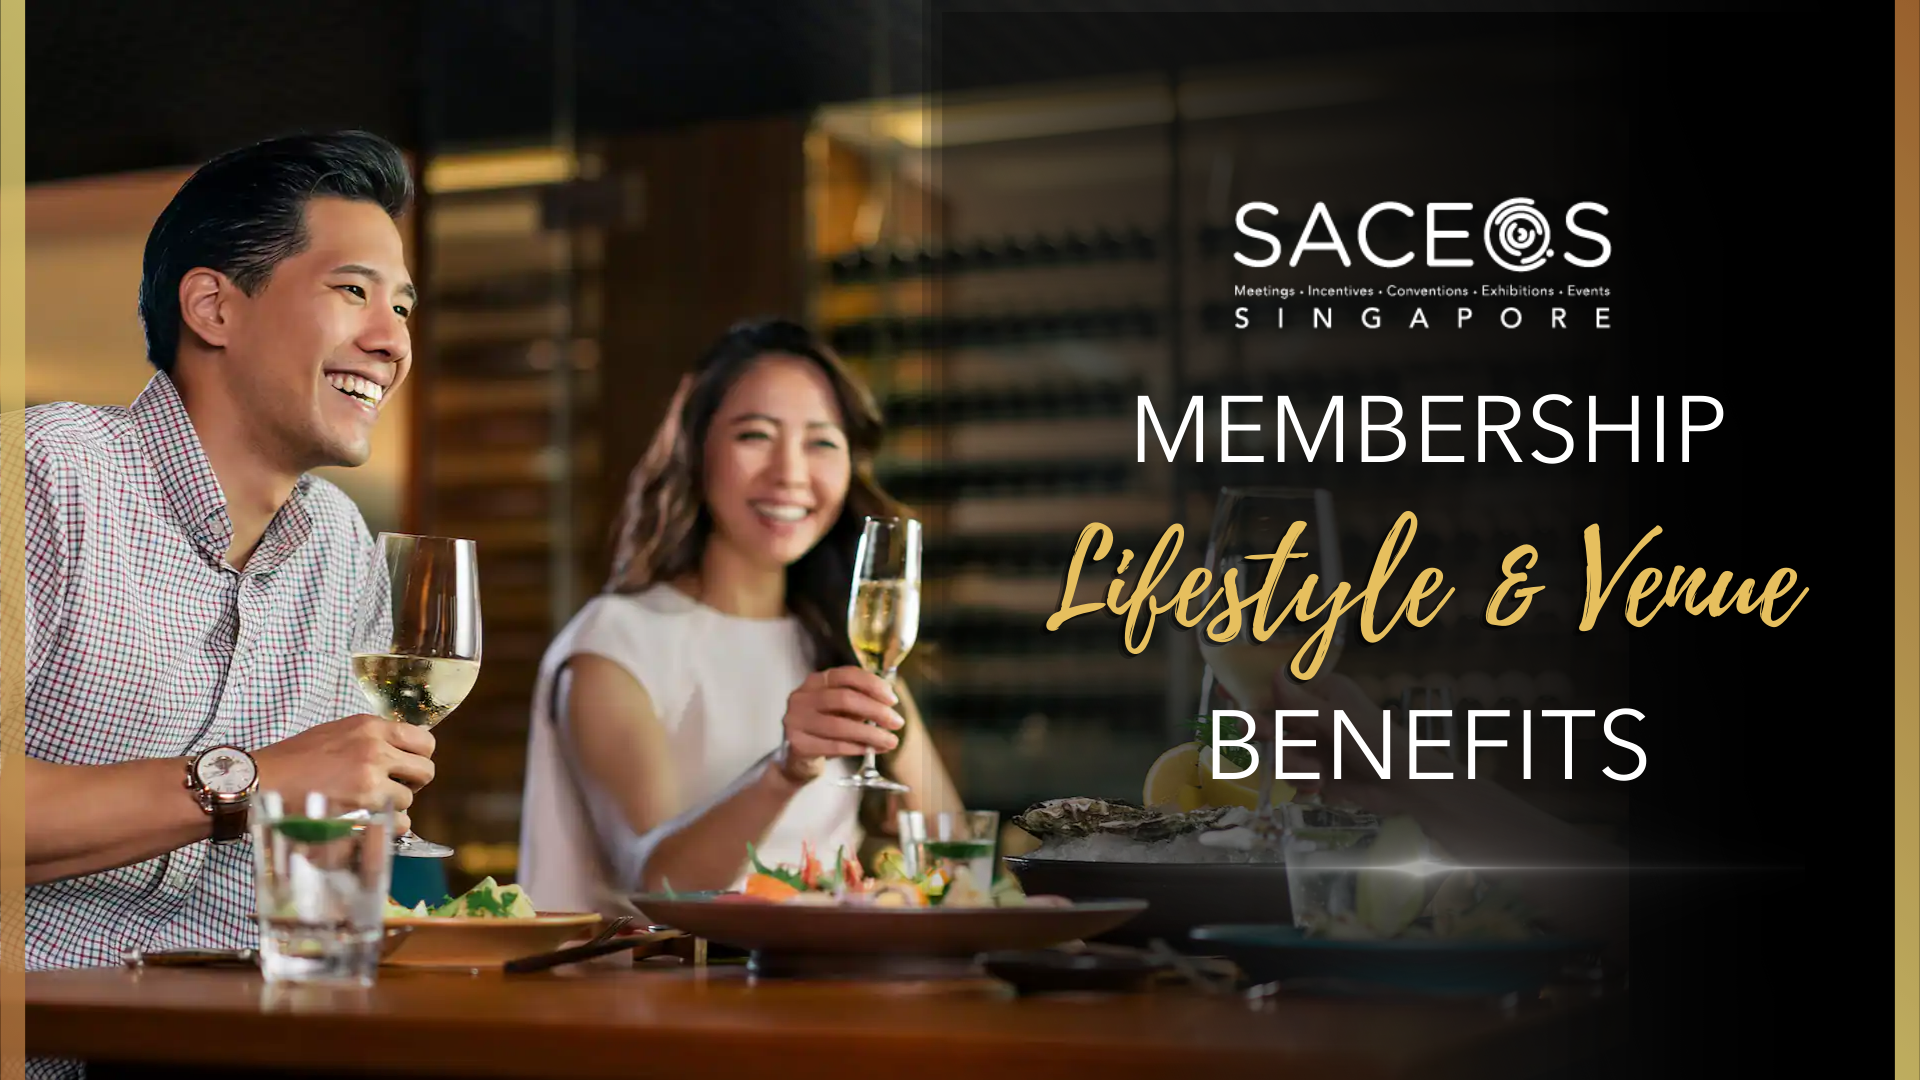 SACEOS Members Lifestyle Venue Benefits